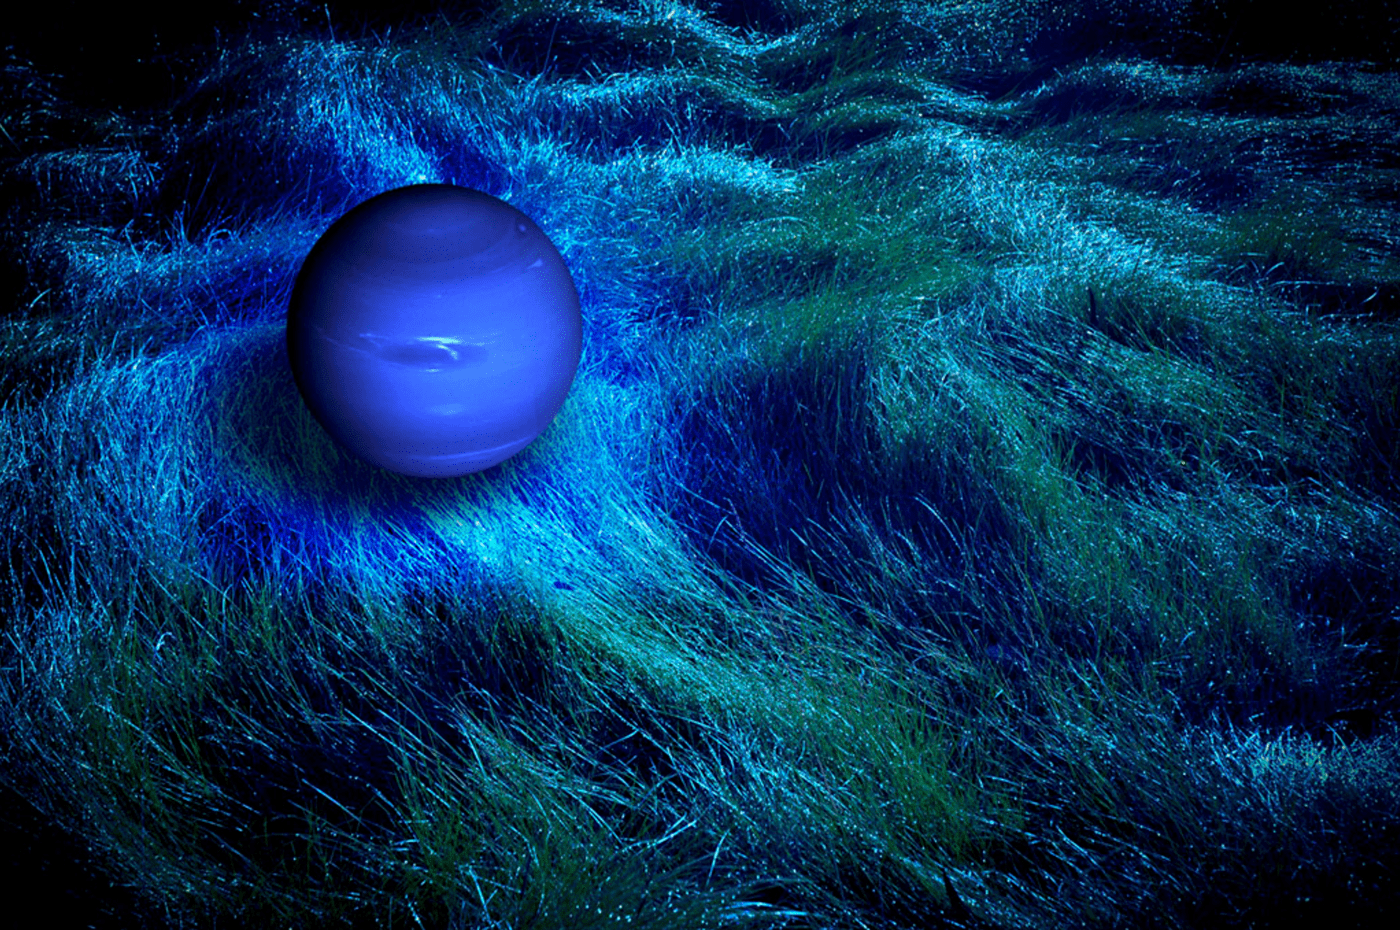 Planets photo series Jupiter saturn venus mars mercury Sun solar system imagination make believe fine art photography Daydream conceptual photography humor